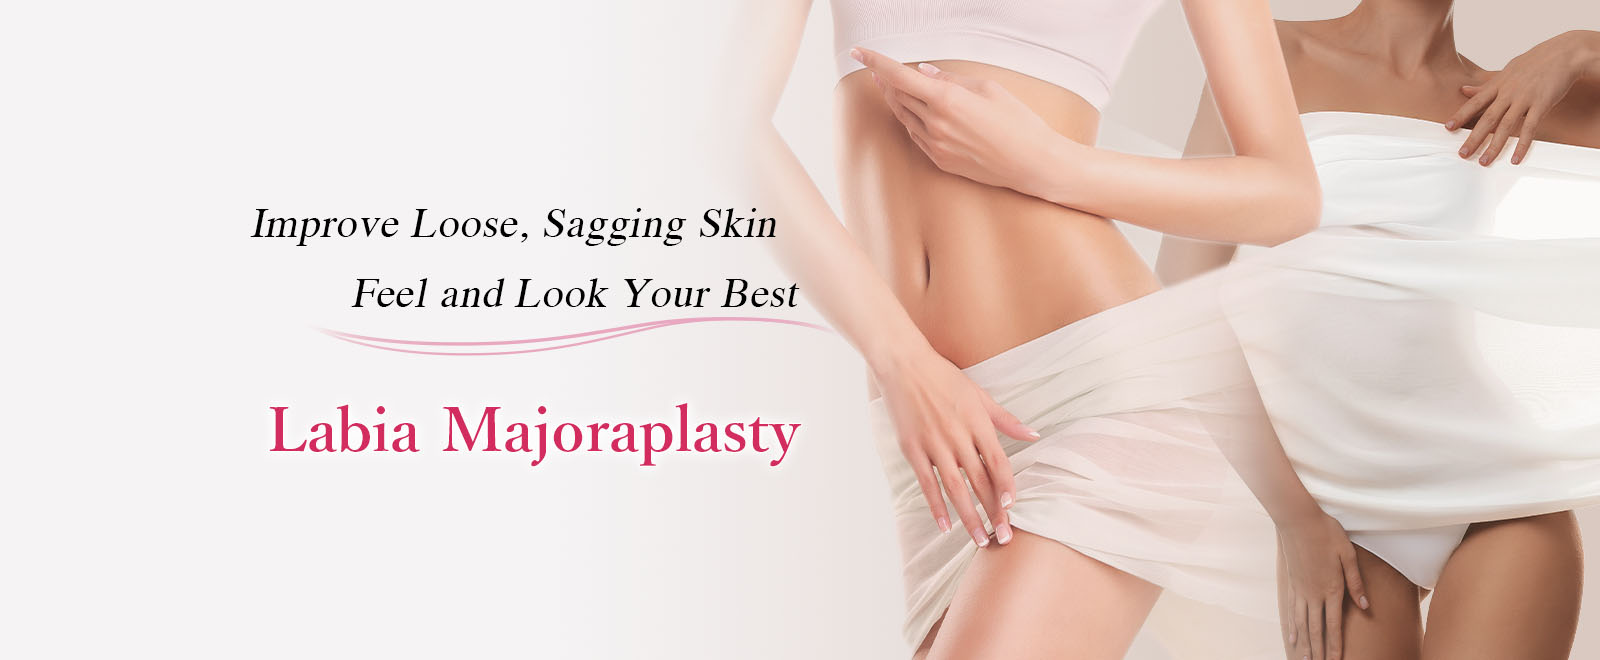 Improve loose, sagging skin. Feel and look your best. Labia Majoraplasty